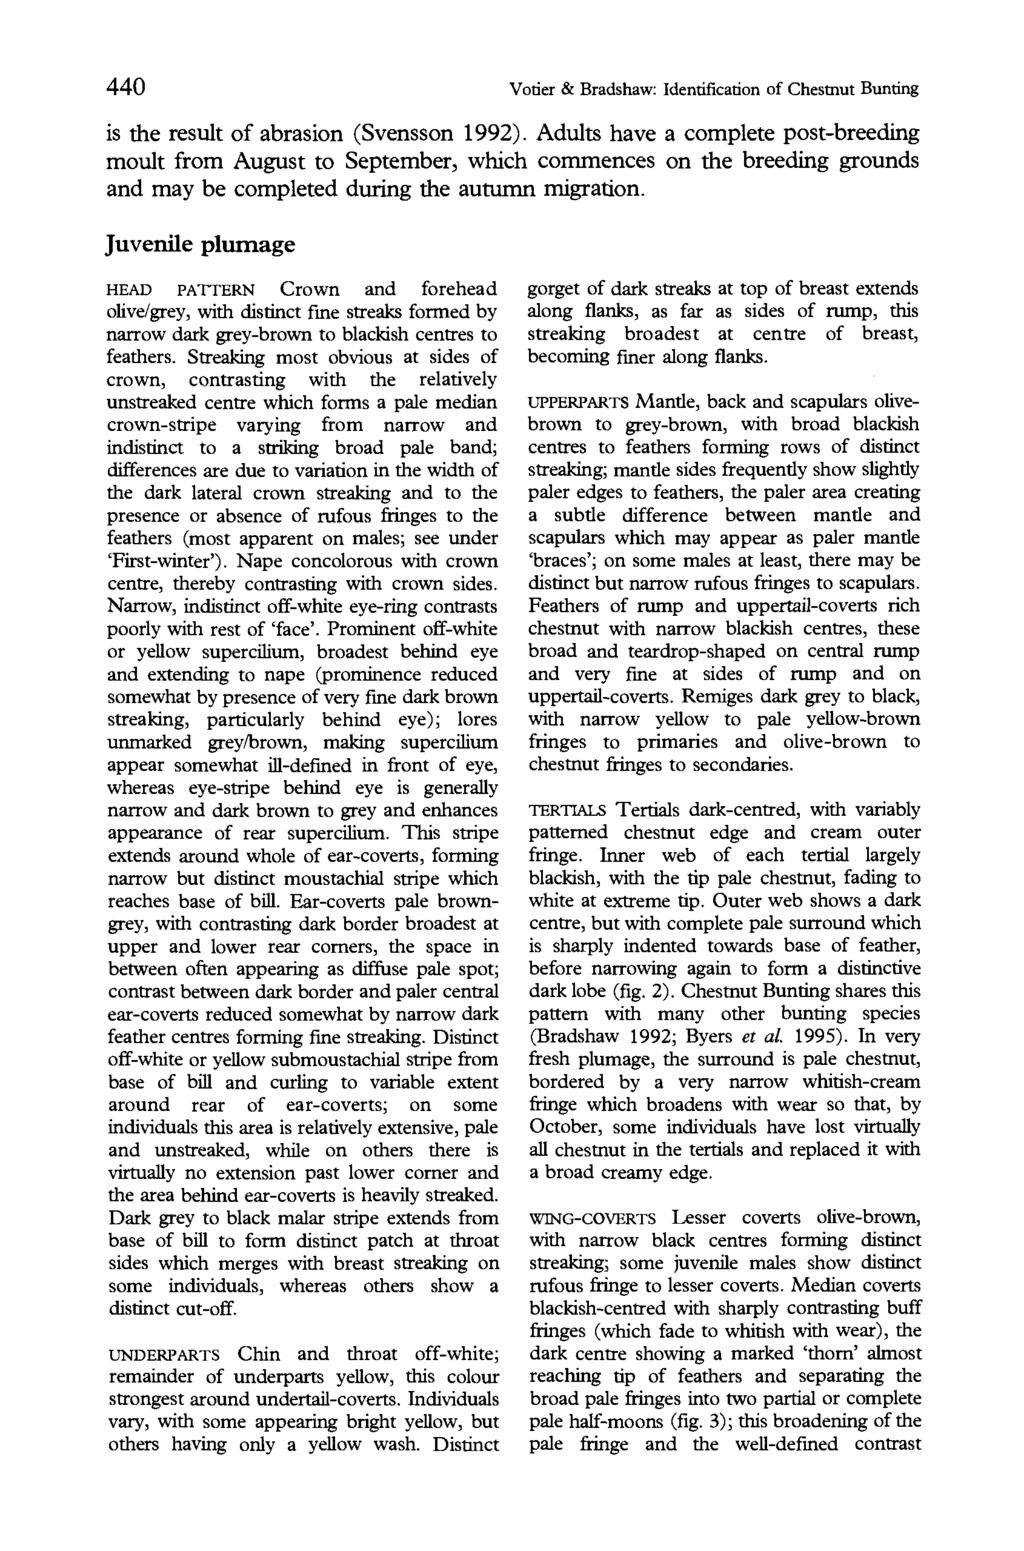 440 Votier & Bradshaw: Identification of Chestnut Bunting is the result of abrasion (Svensson 1992).